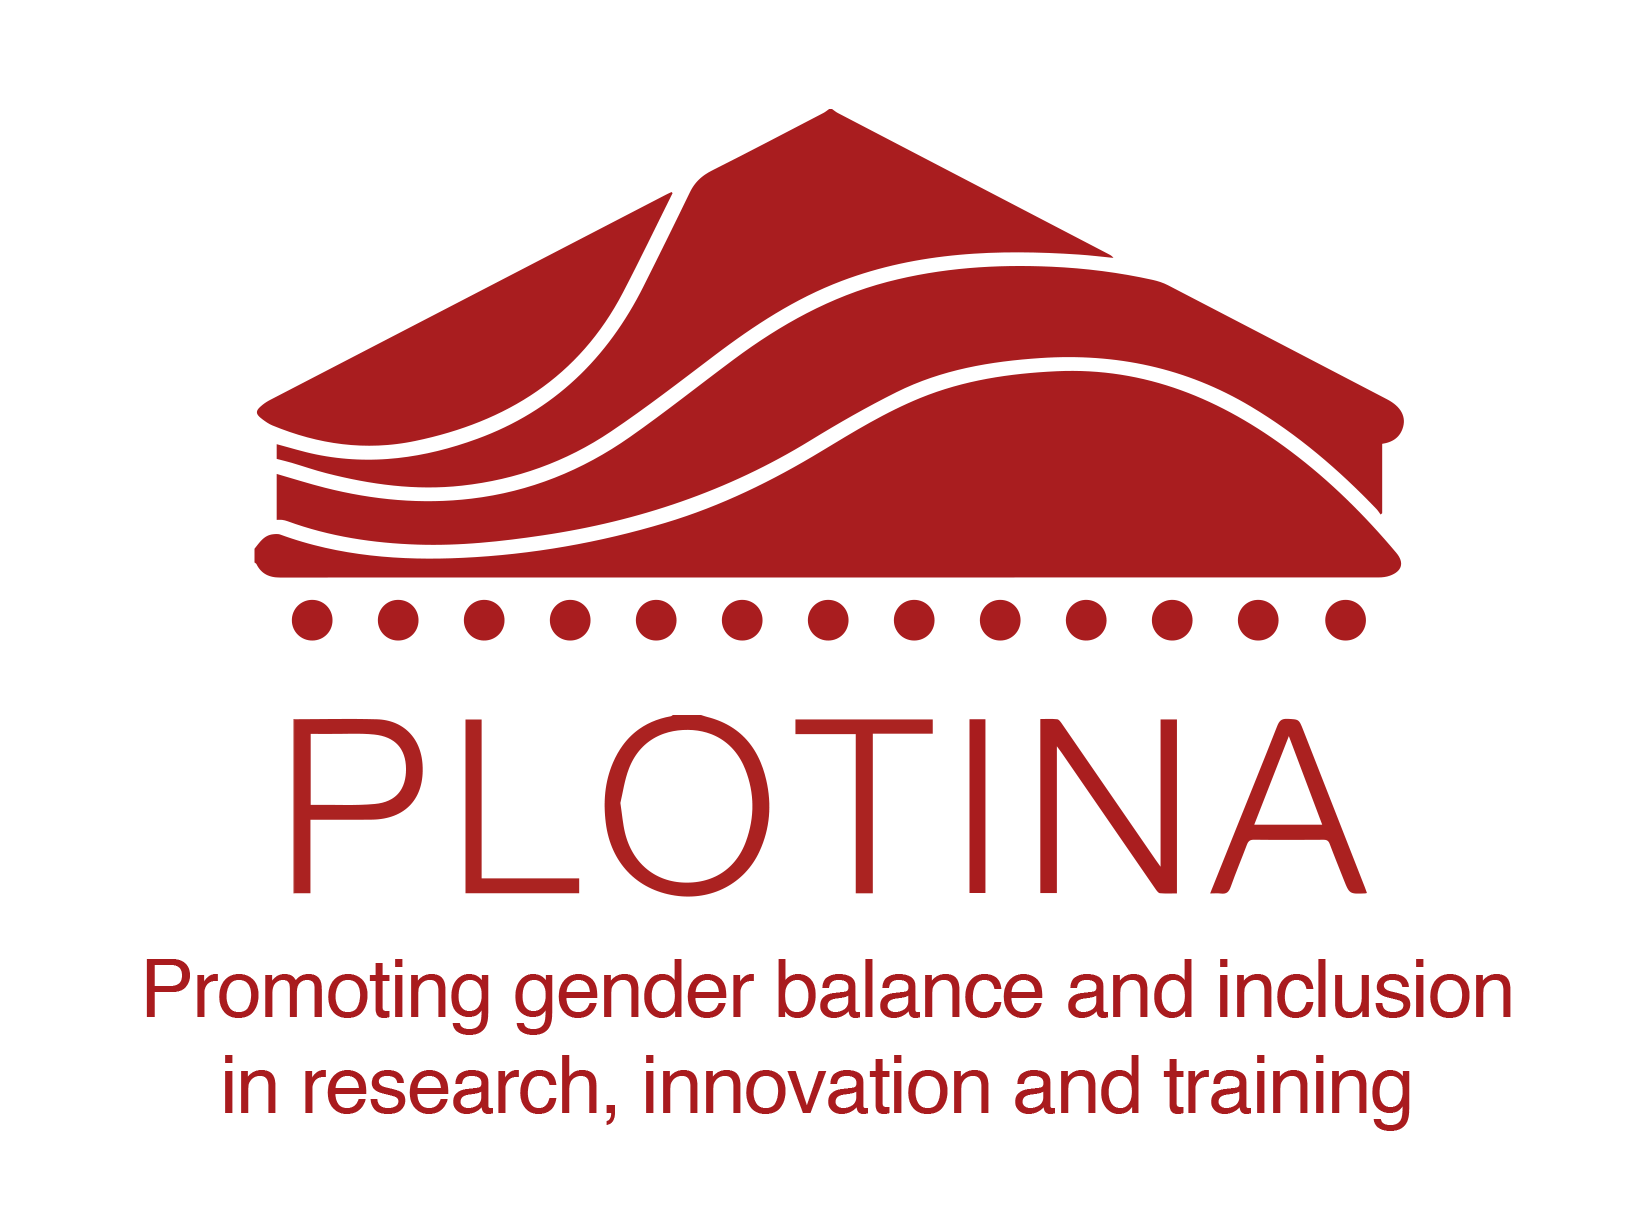 PLOTINA logo